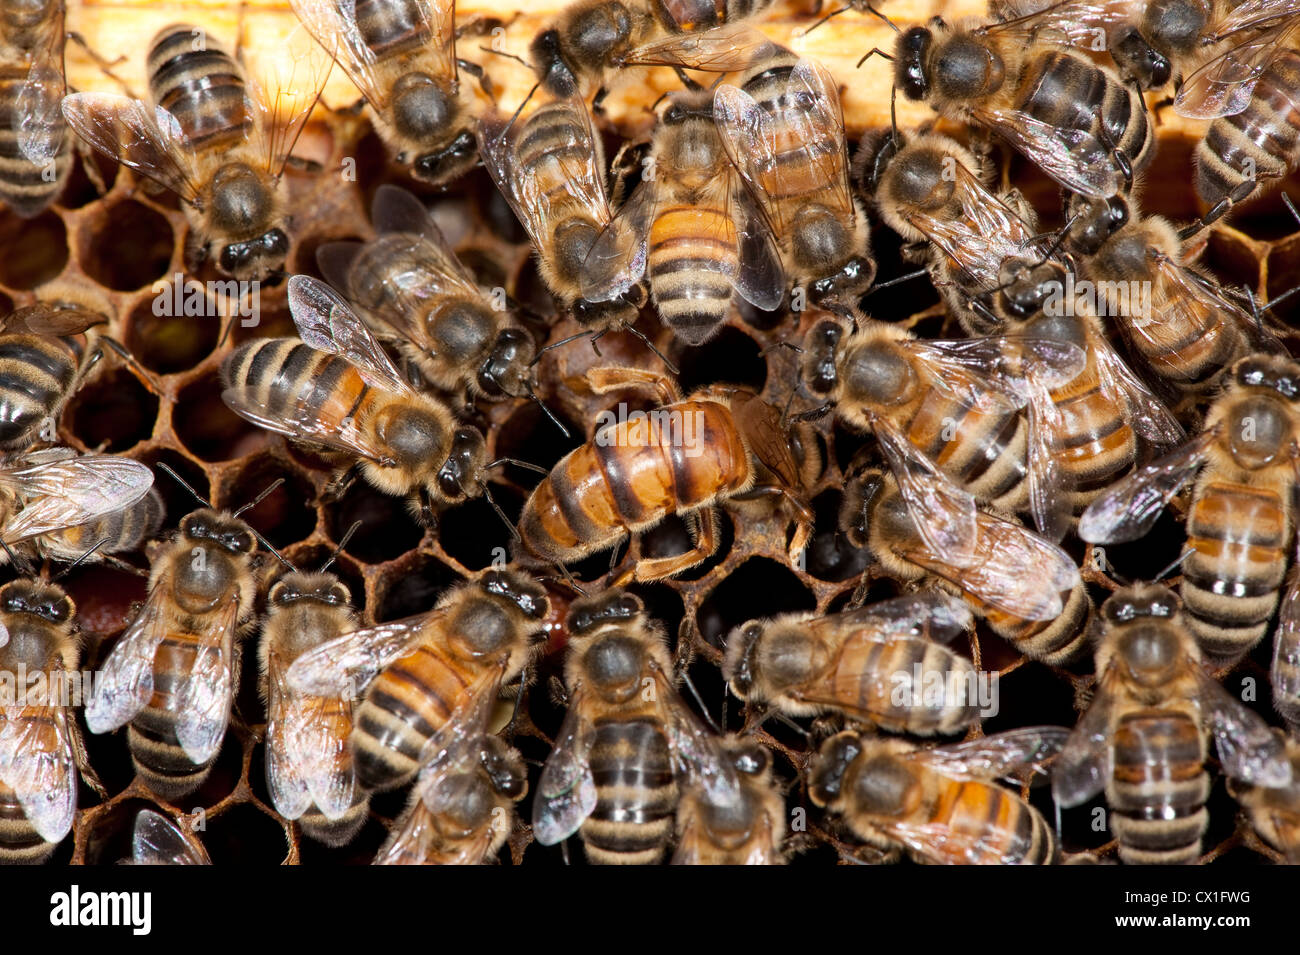 New Zealand Königin auf Zellen im Bienenstock umgeben von Arbeitnehmern Honig Biene Apis Mellifera Kent UK Honecomb tendenziell Zellen Stockfoto